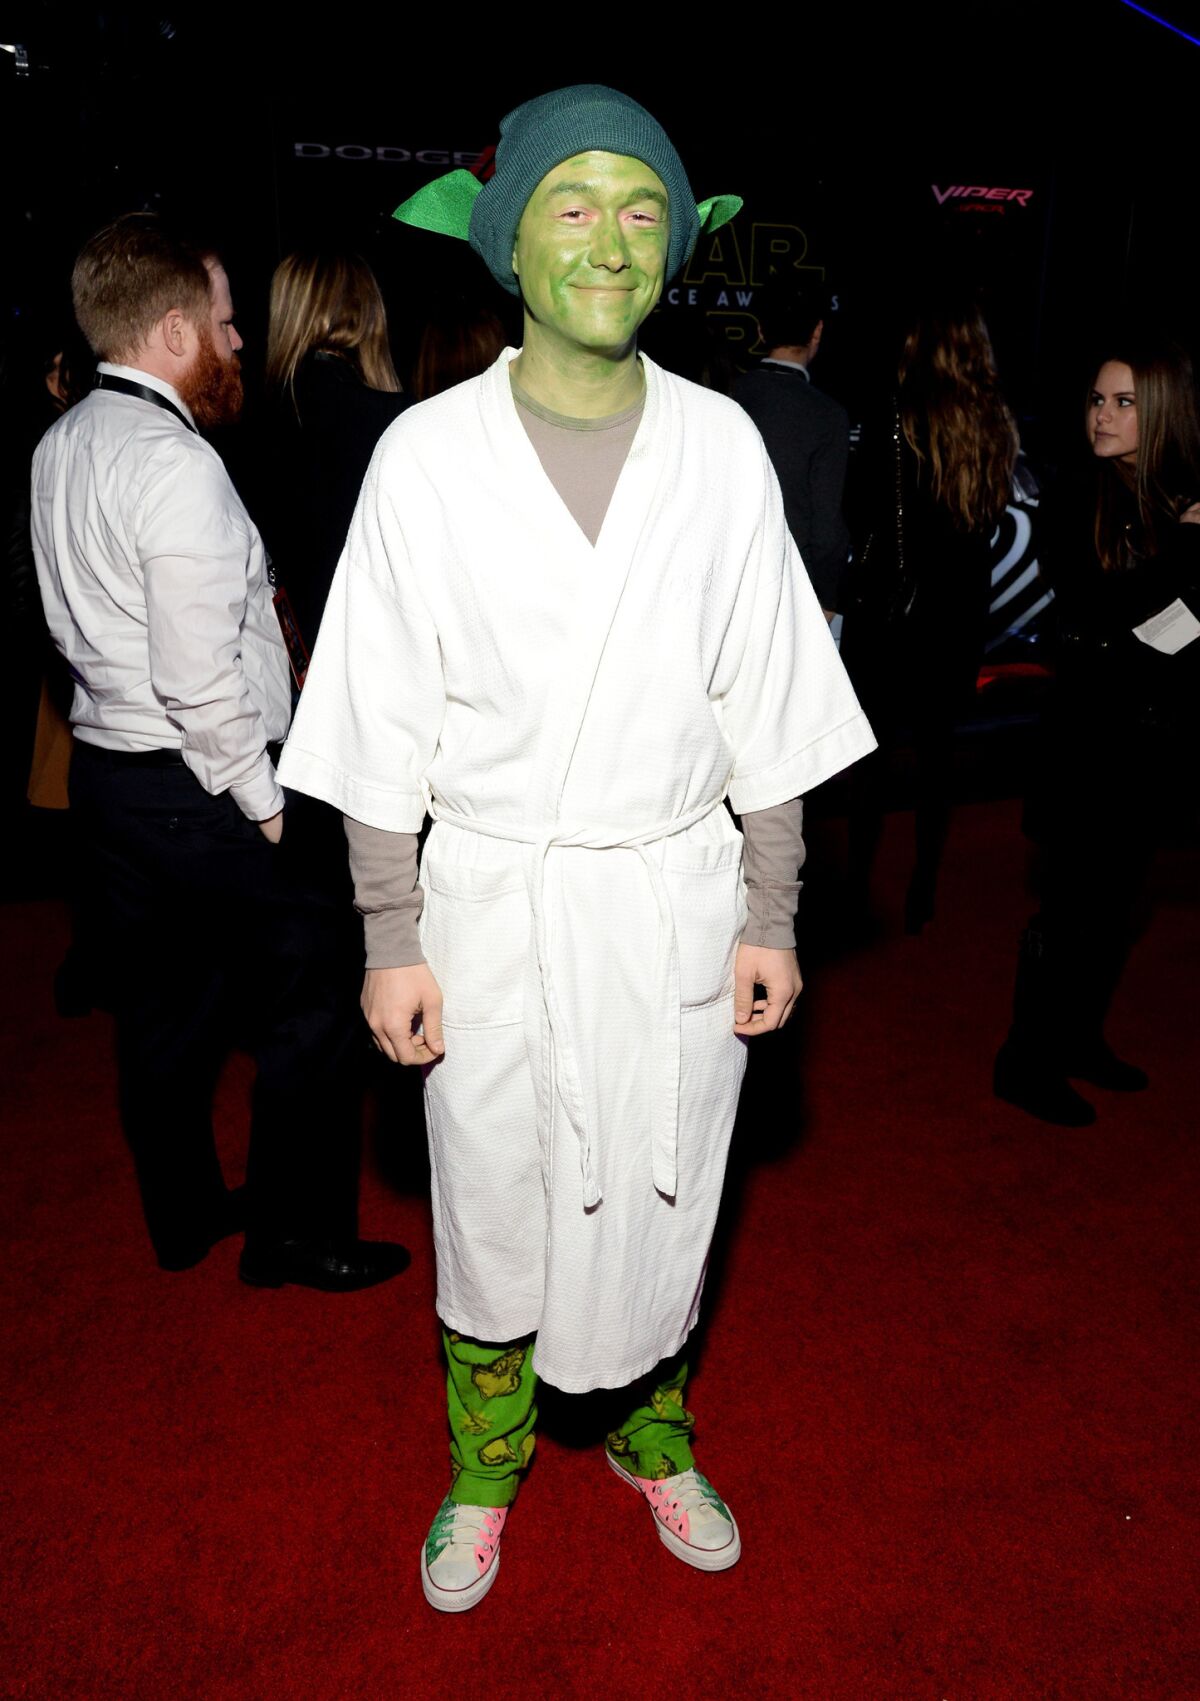 Joseph Gordon-Levitt arrives at the Hollywood premiere of "Star Wars: The Force Awakens."